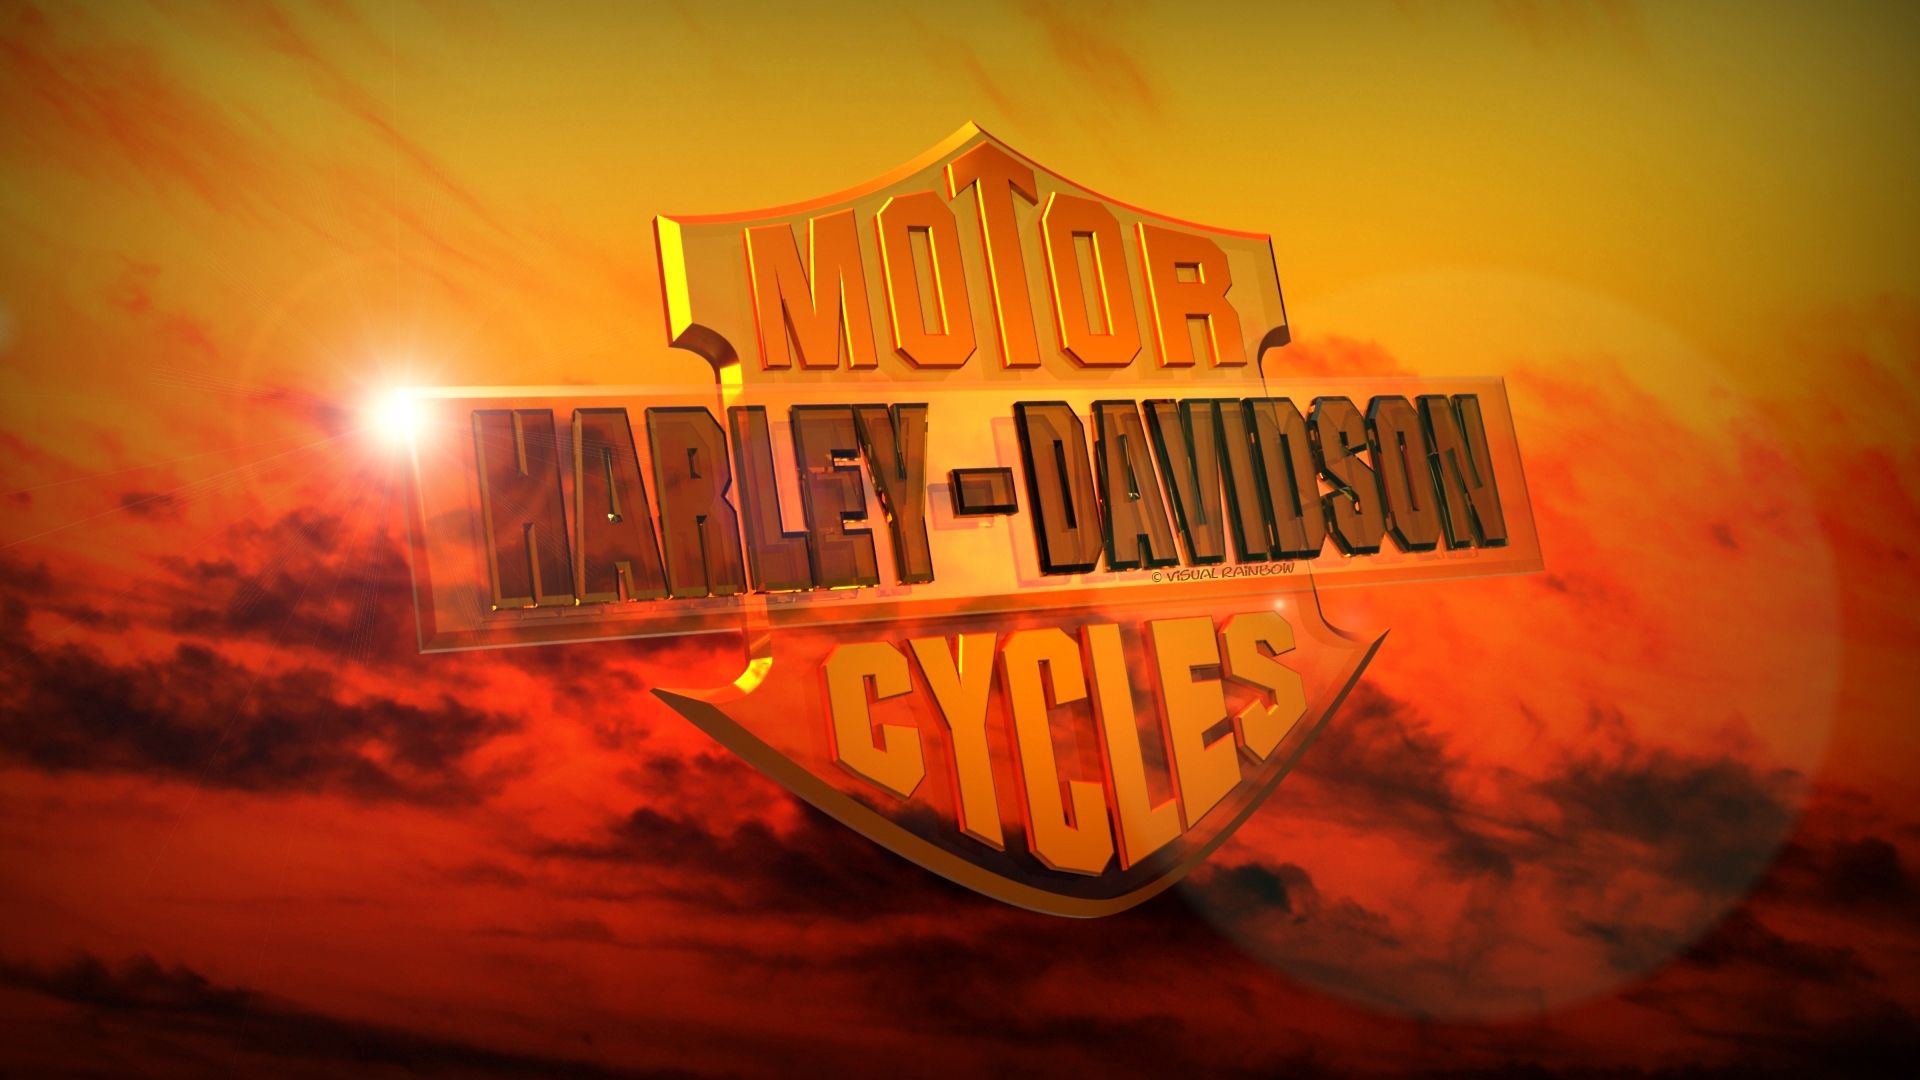 Free Harley Davidson Wallpaper Group Wallpaper House.com